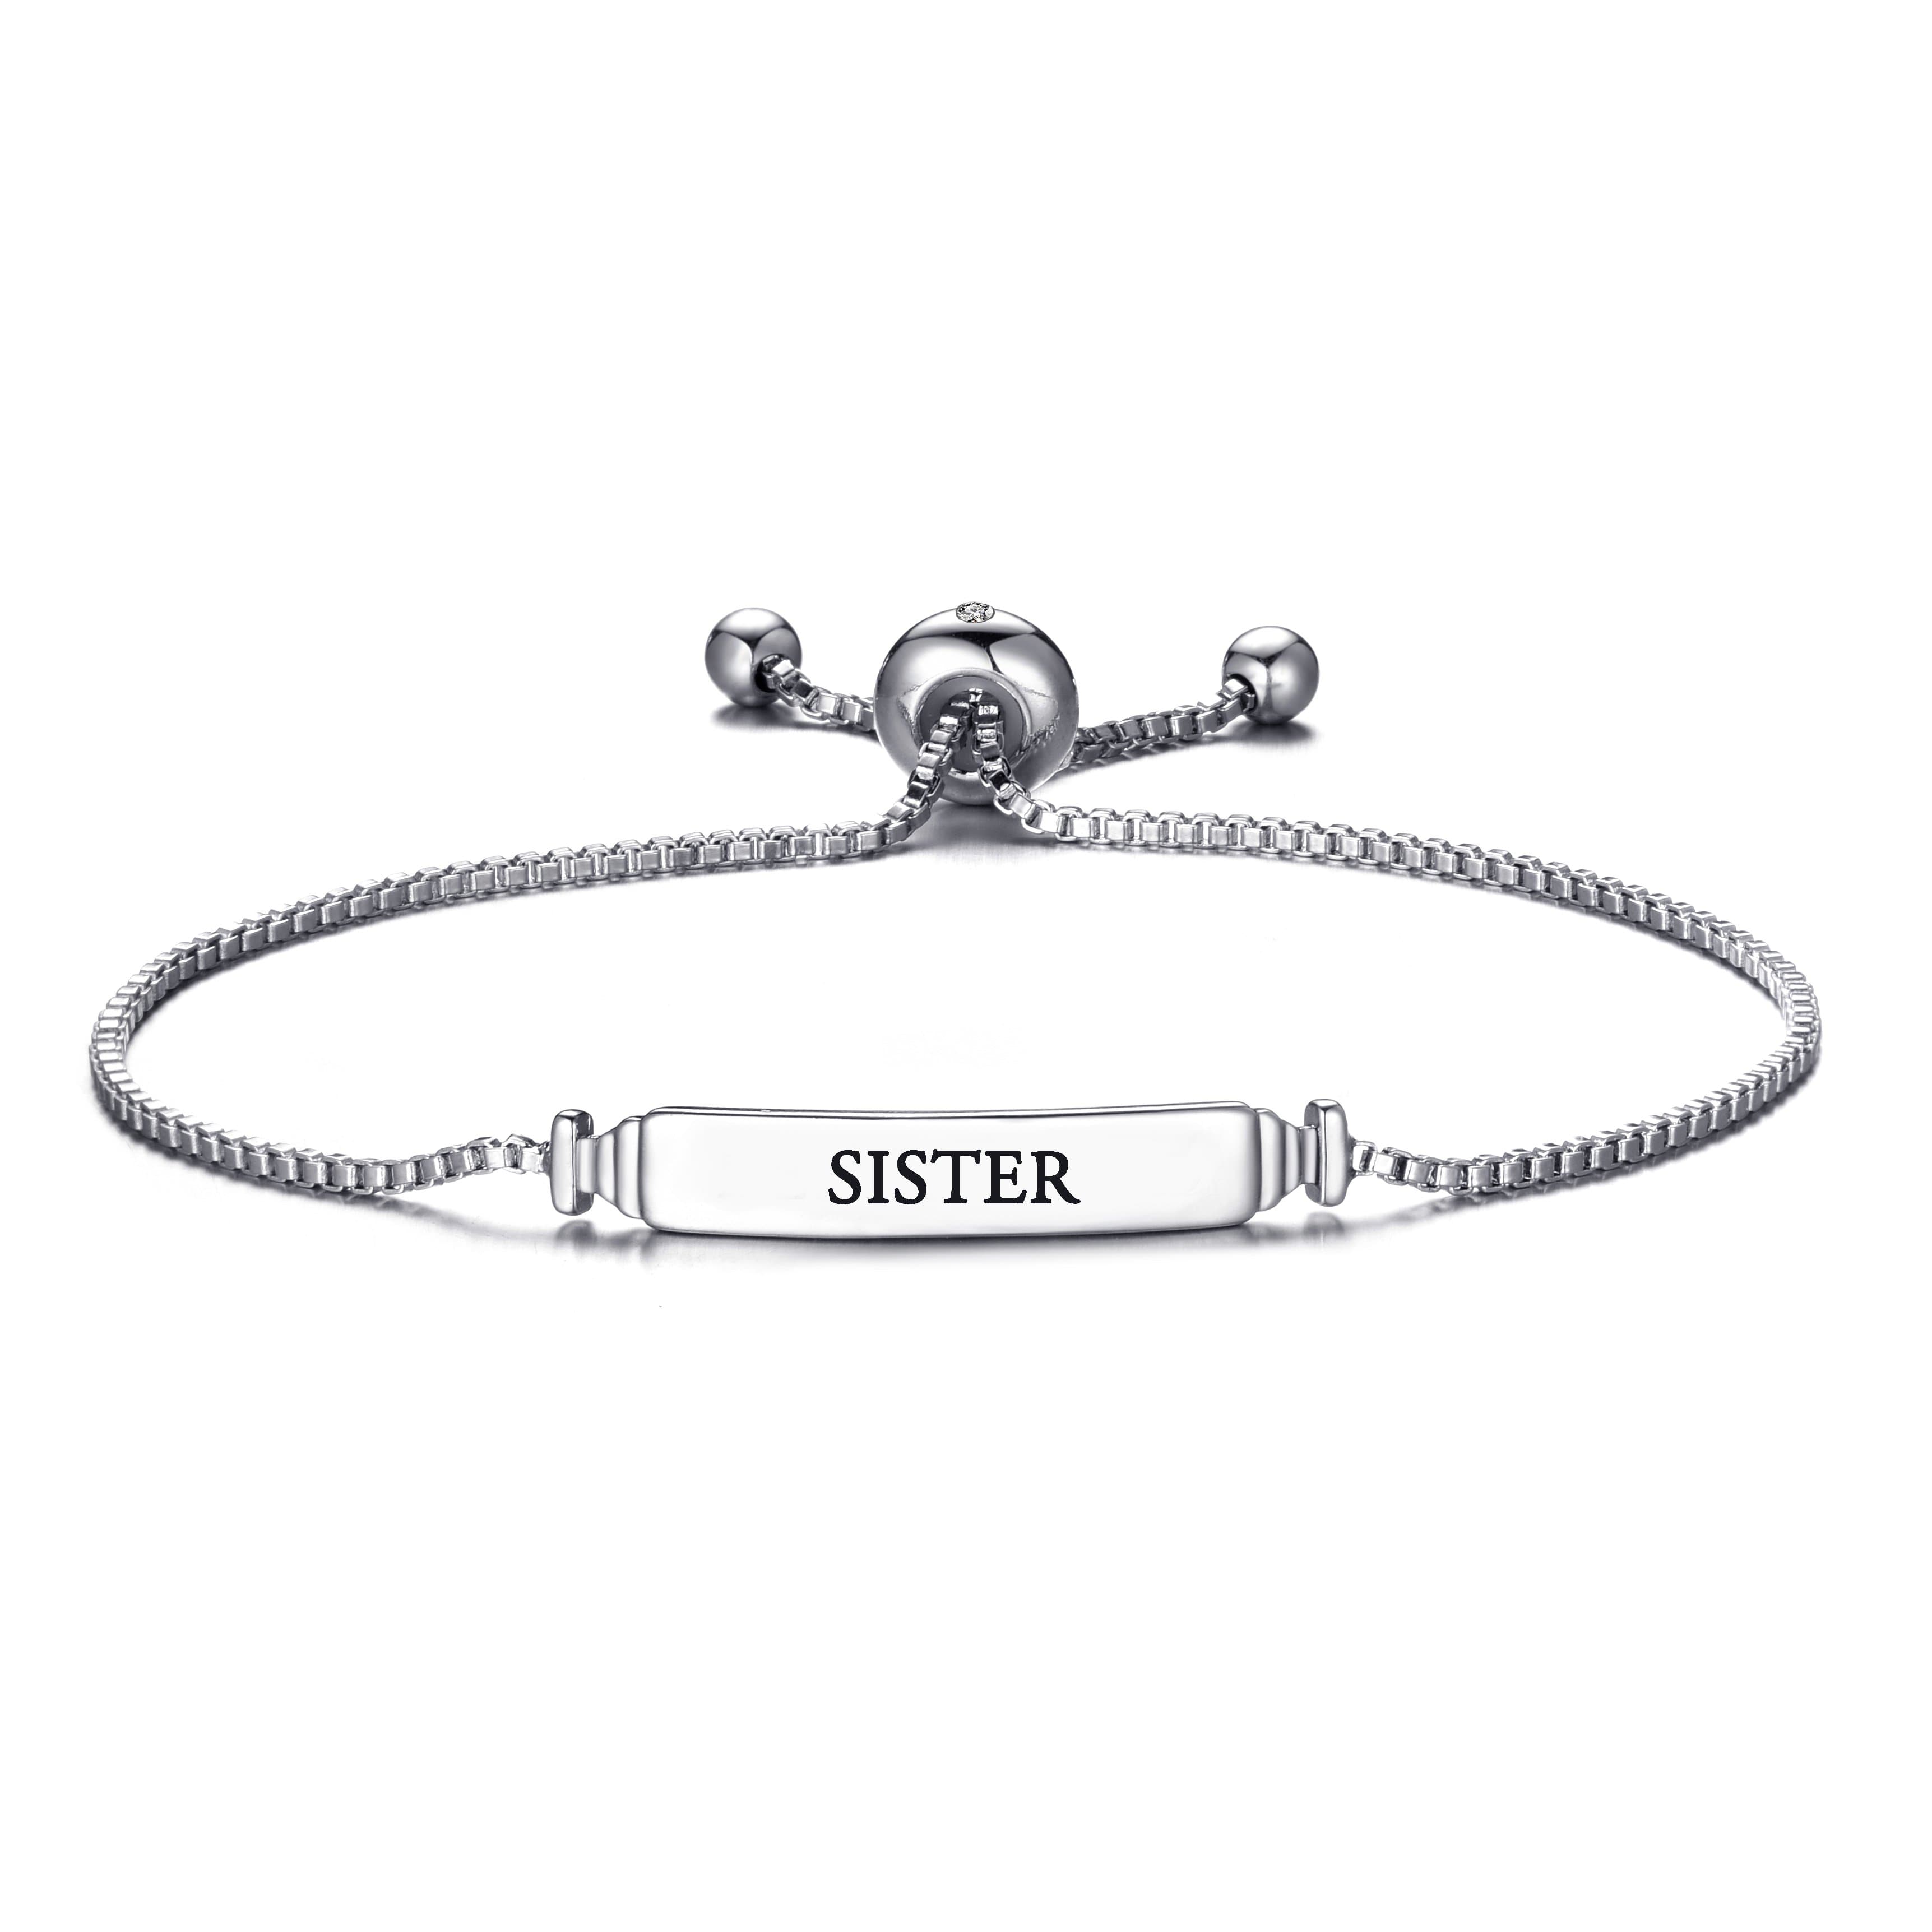 Sister ID Friendship Bracelet Created with Zircondia® Crystals by Philip Jones Jewellery